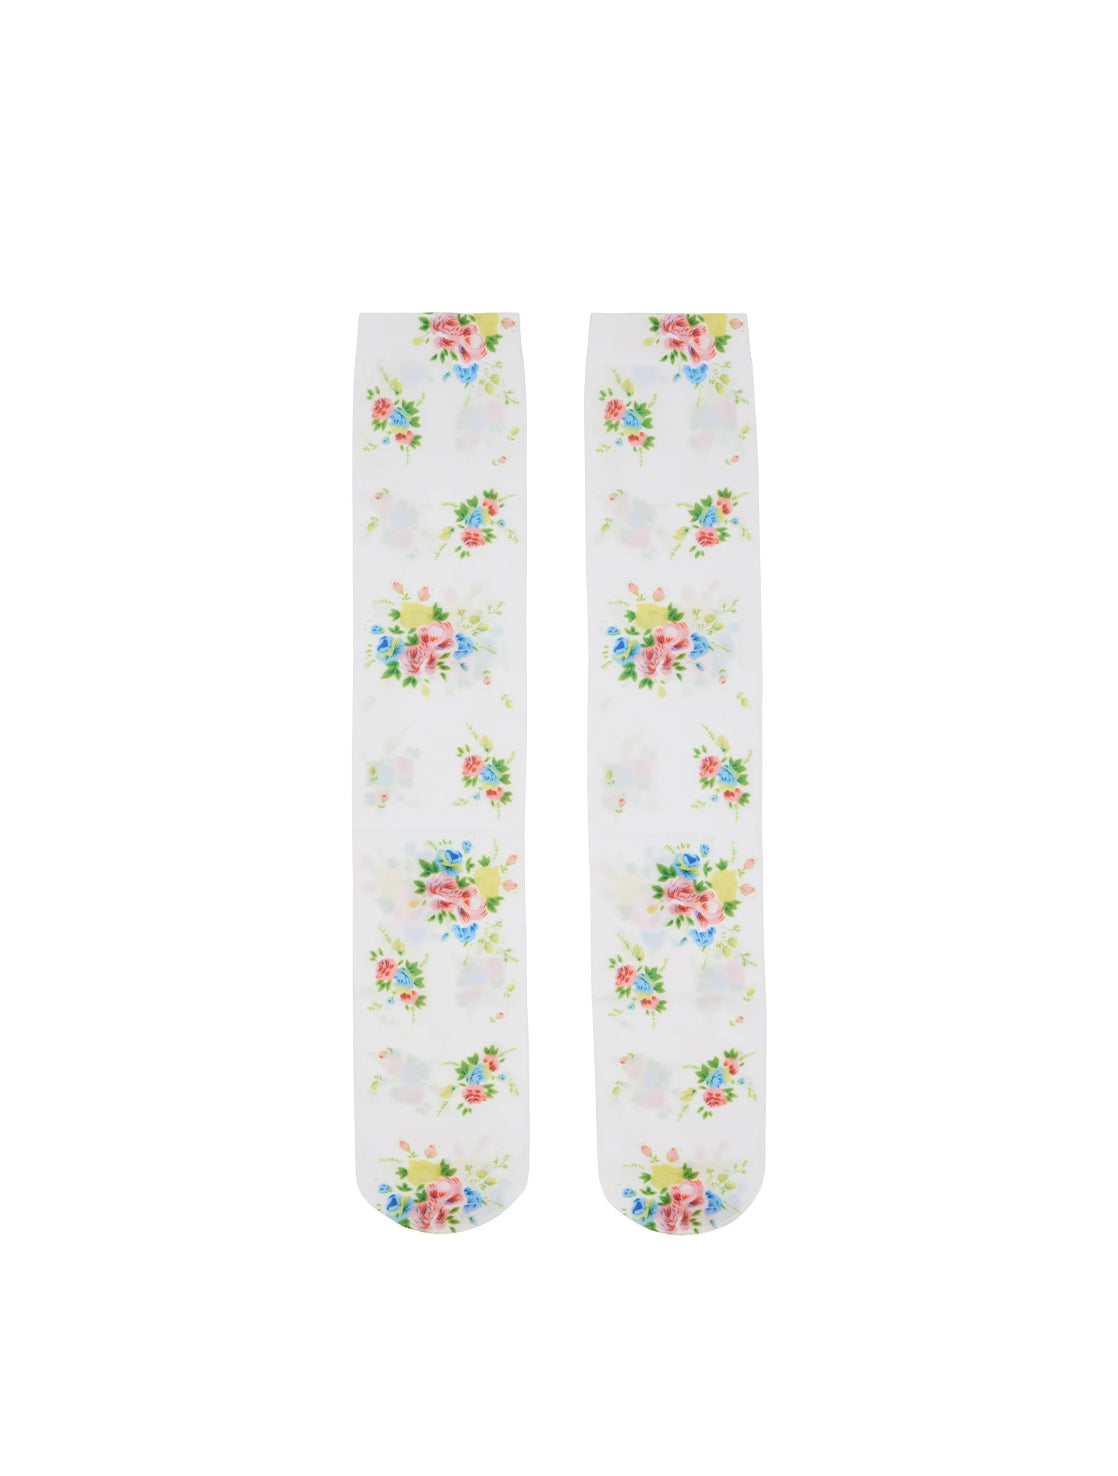 YUHAN WANG knee high floral printed sock-